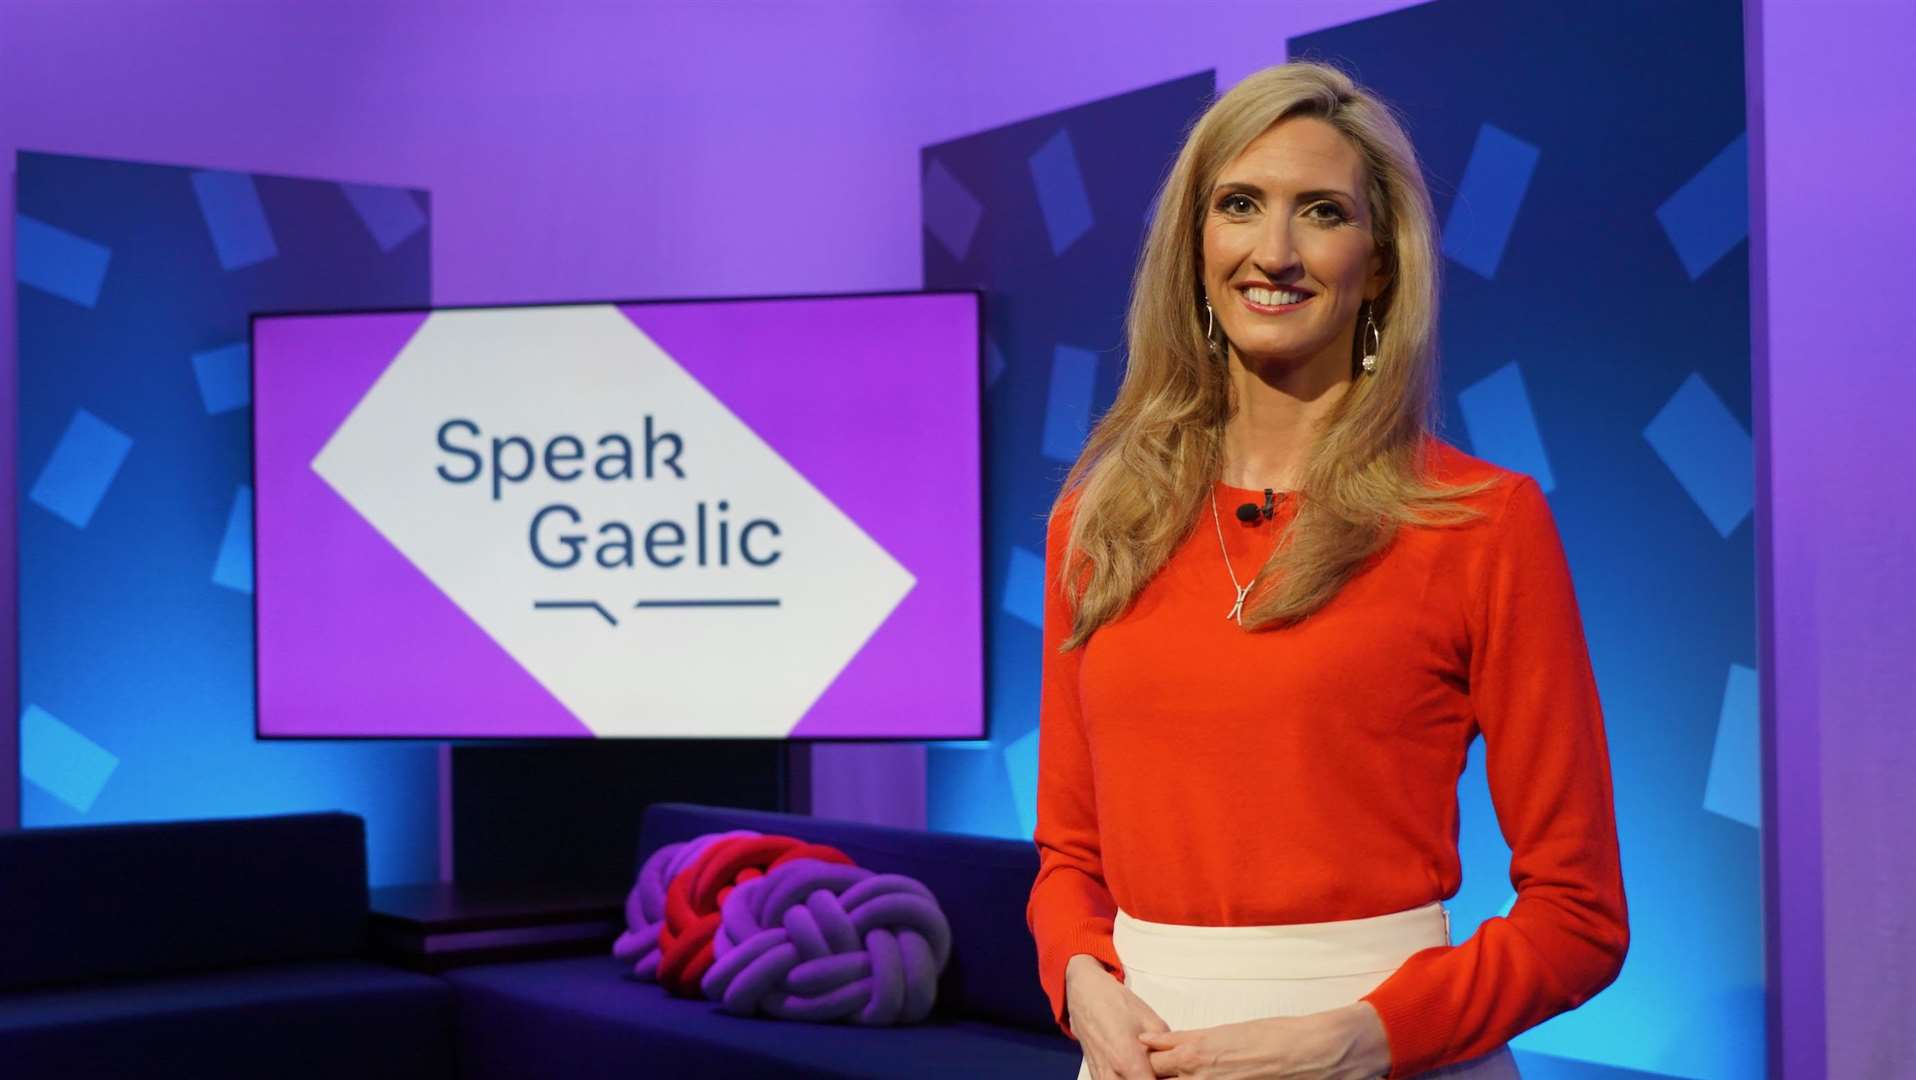 Joy Dunlop guides audiences through the journey to speak Gaelic.